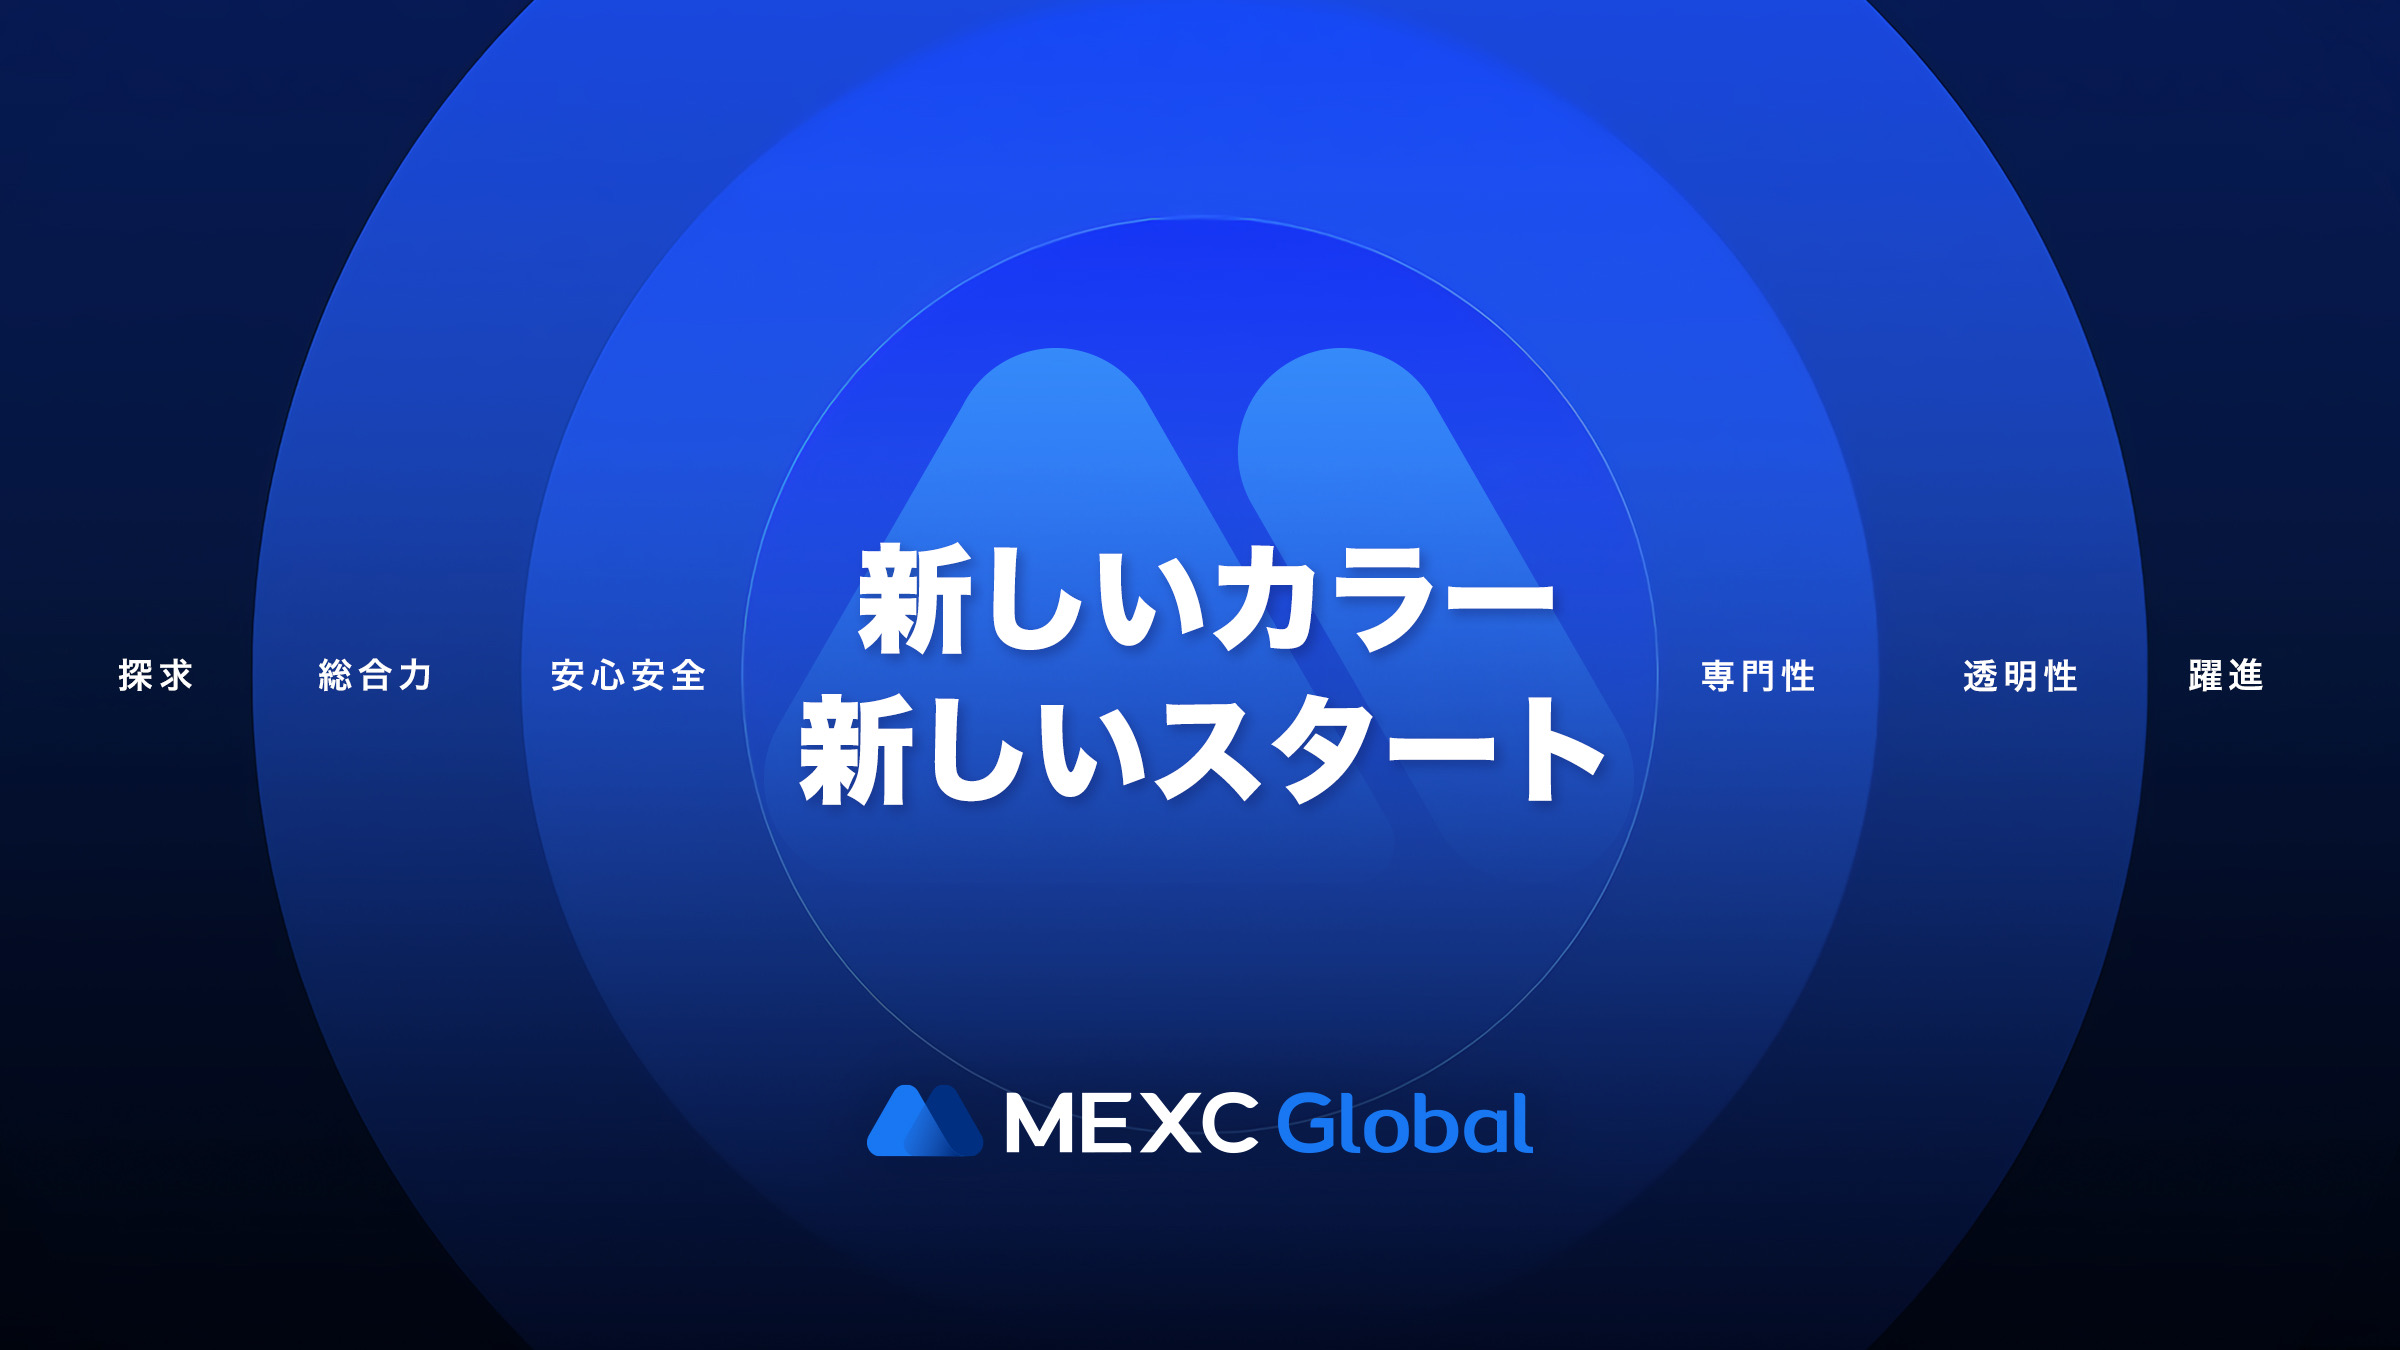 MEXCユーザー数が1,000万人を突破！